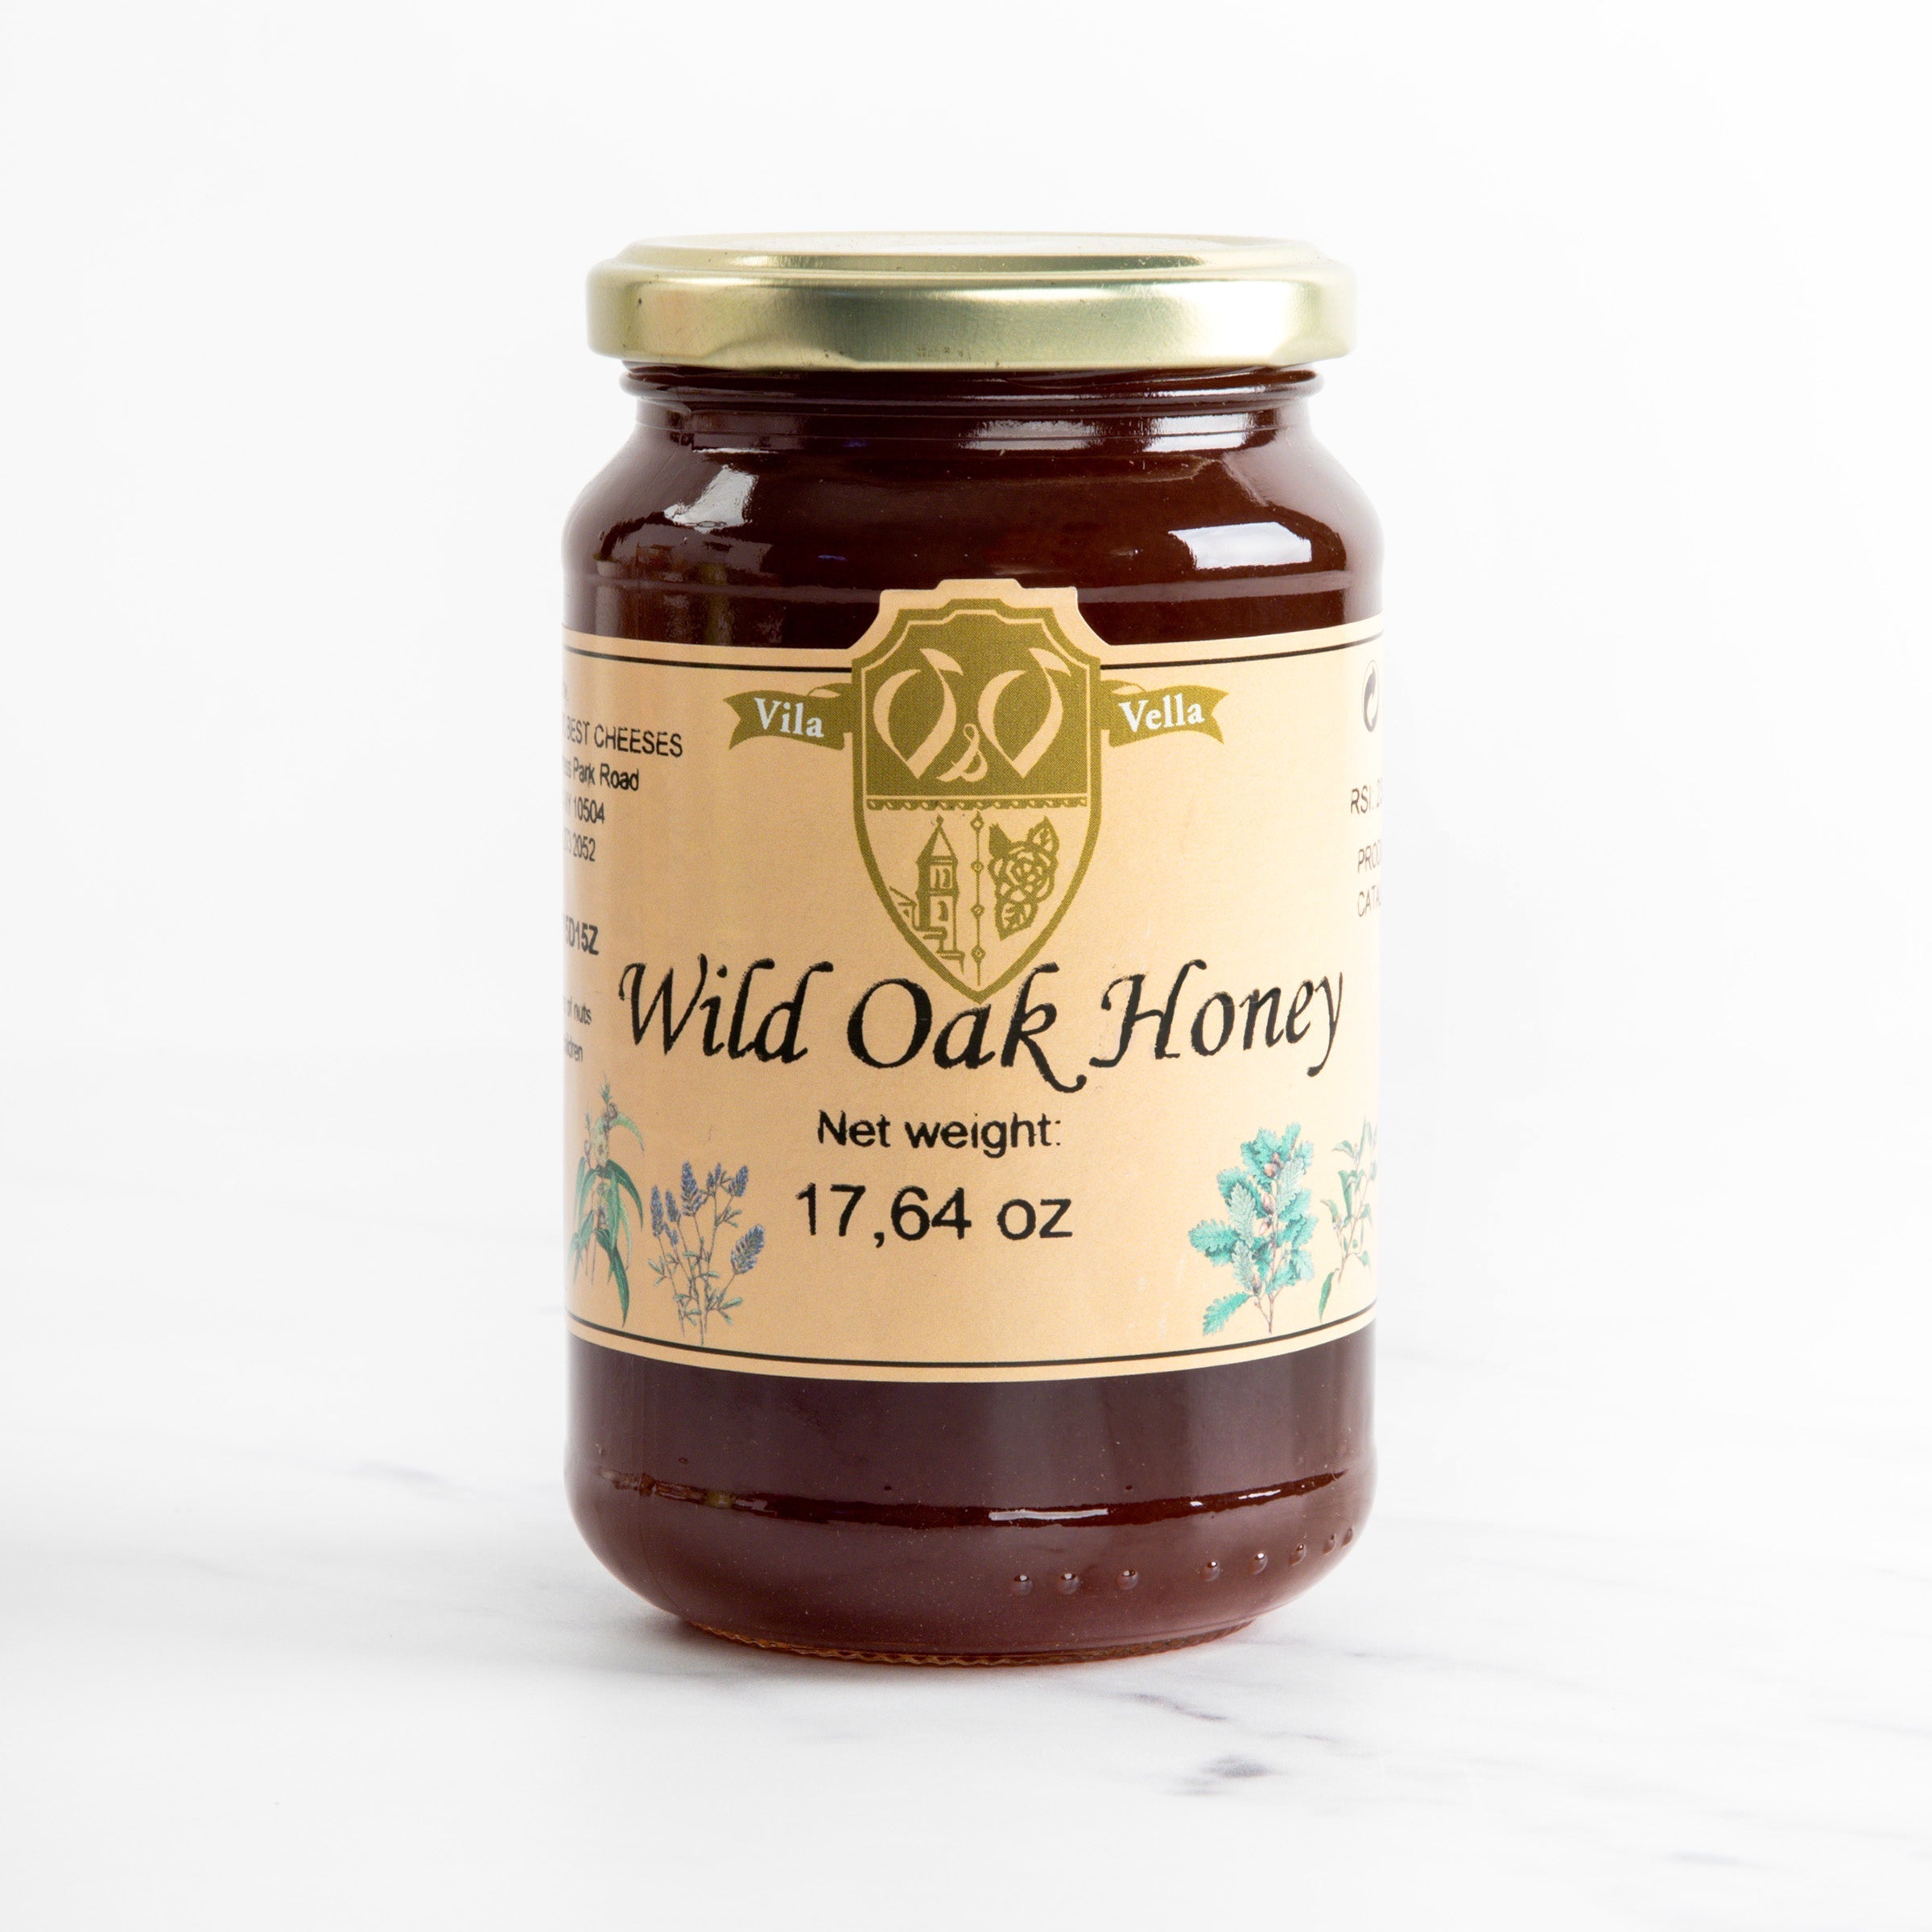 Vila Vella Wild Oak Honey 17.64oz 6ct